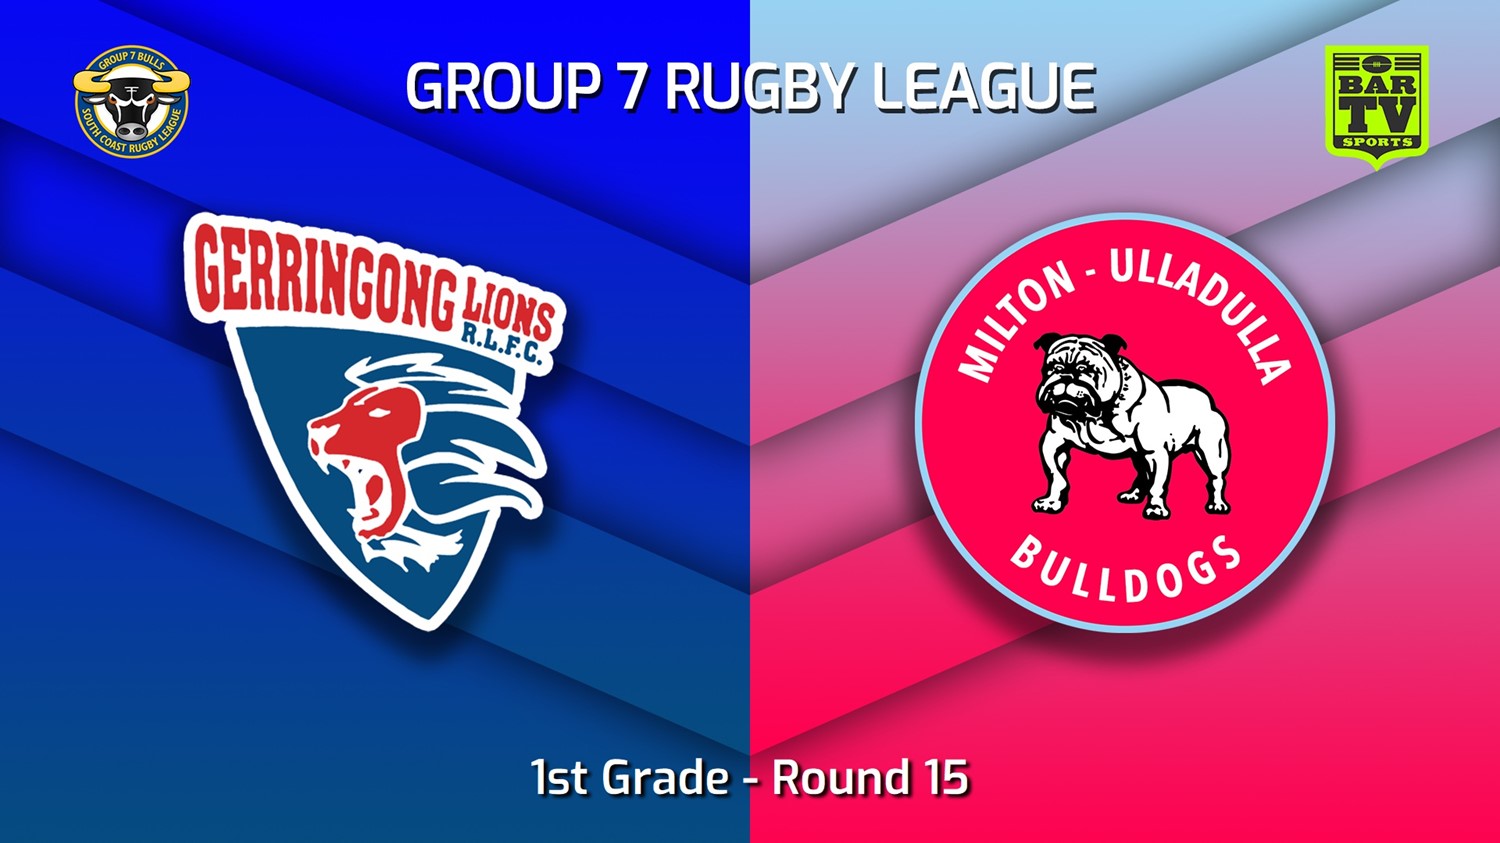 230722-South Coast Round 15 - 1st Grade - Gerringong Lions v Milton-Ulladulla Bulldogs Slate Image